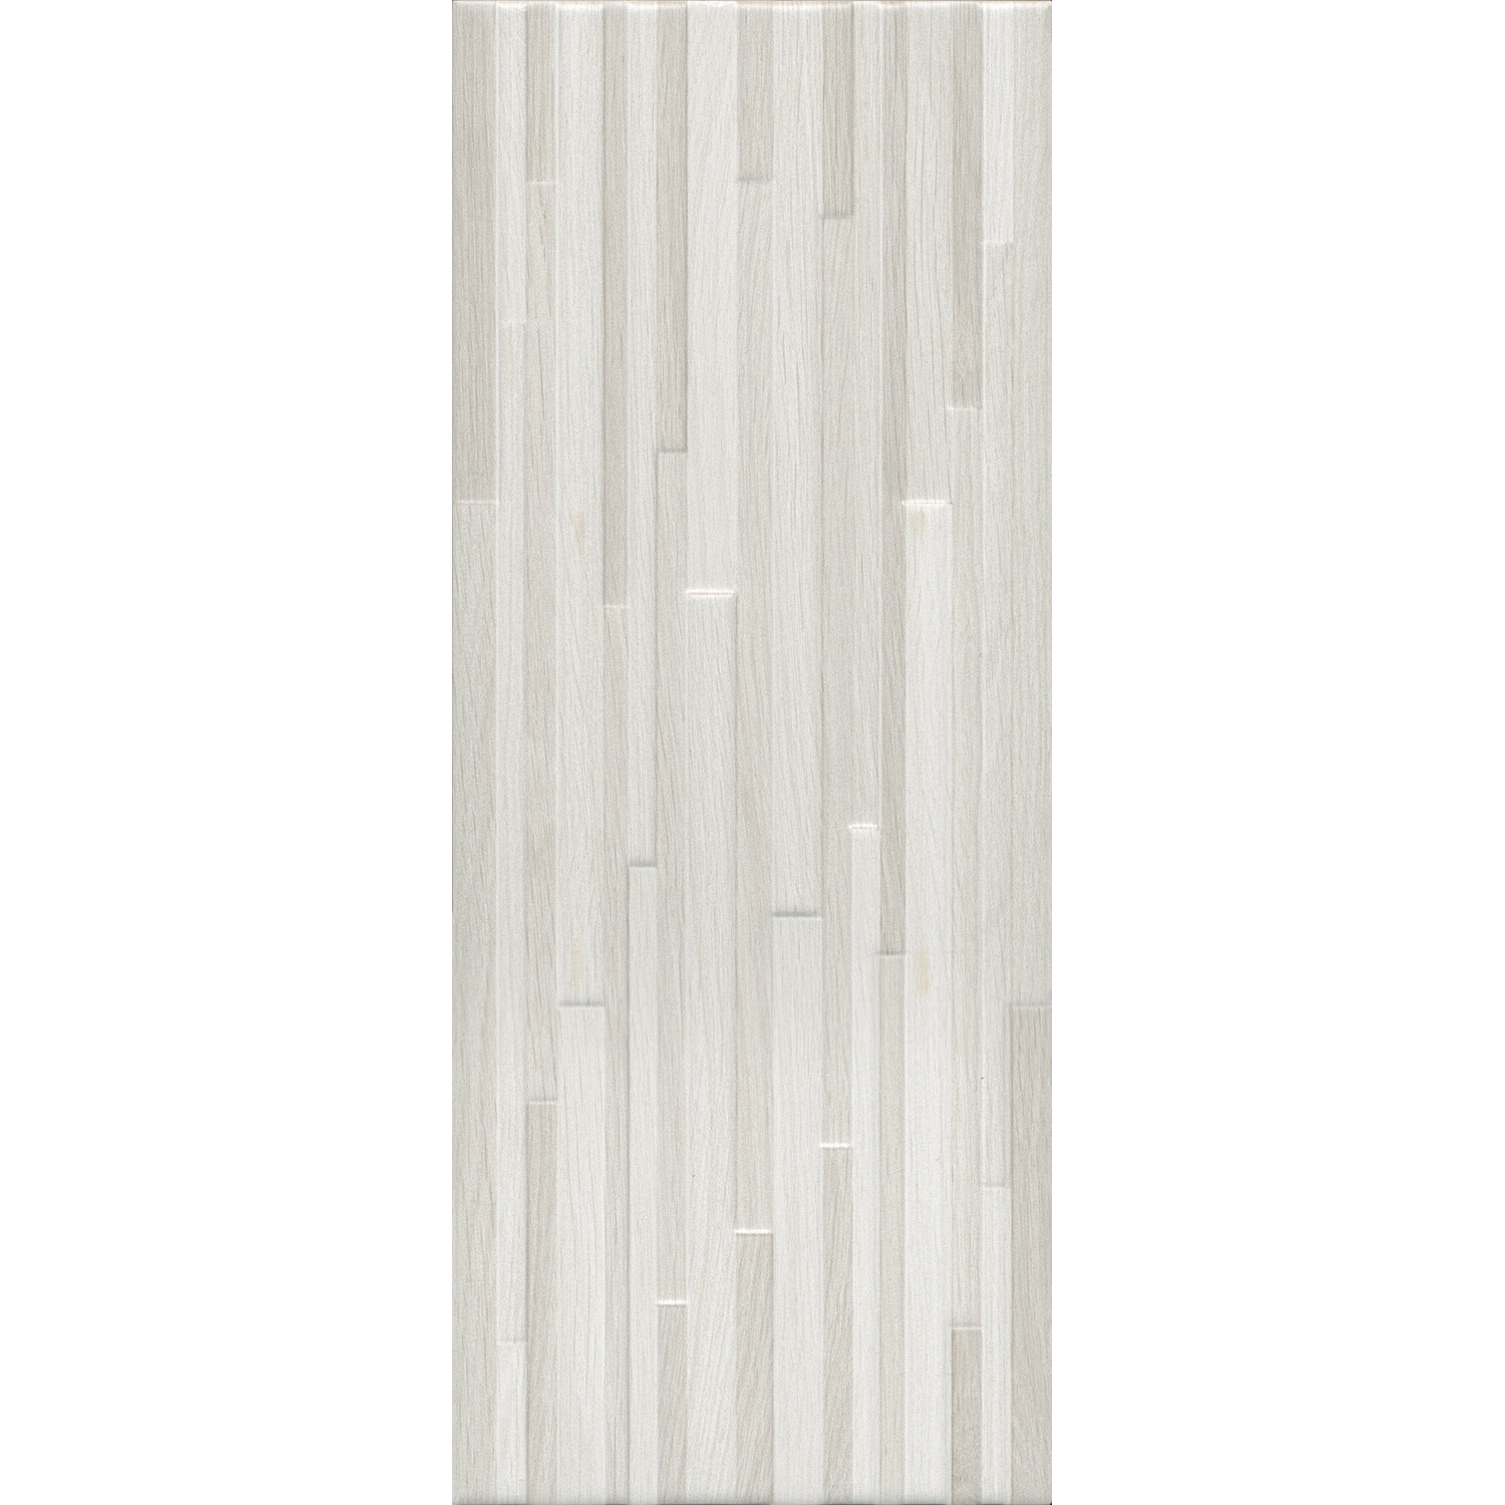 Плитка Kerama Marazzi Ауленти беж светлый структура 7220 20x50 см плитка настенная kerama marazzi сигма 20x60 см 1 2 м² глянцевая цвет белый полосы